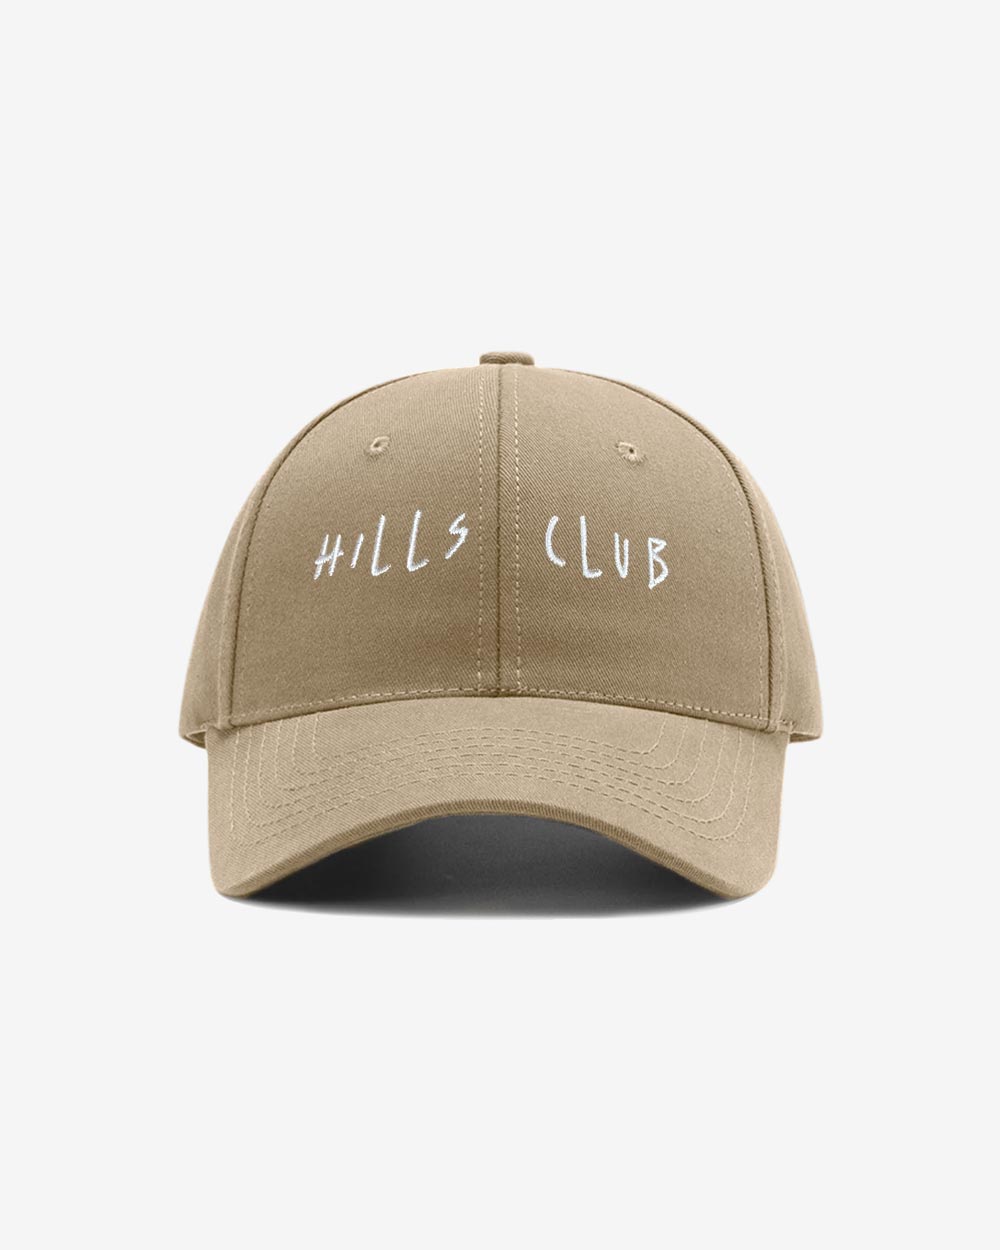 Hills Club Cap (Sand)